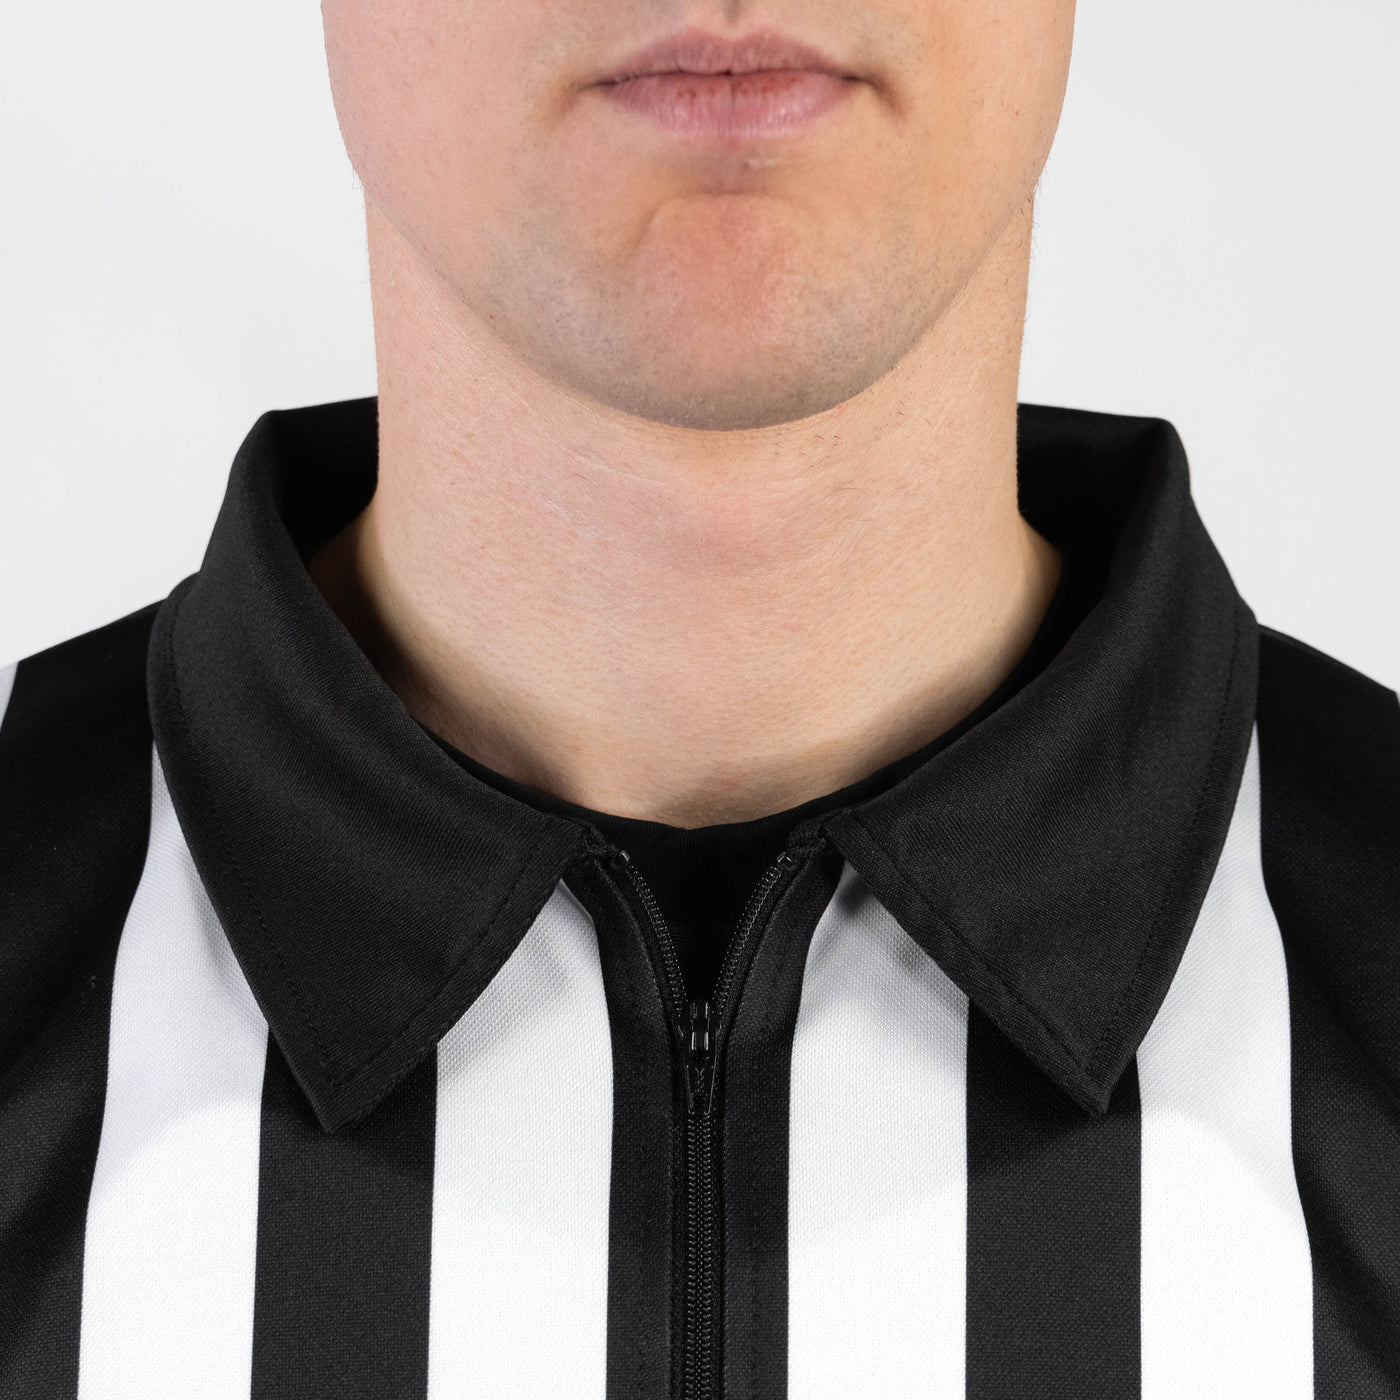 Zebrasclub ZL1 hockey referee jersey with snaps close up collar